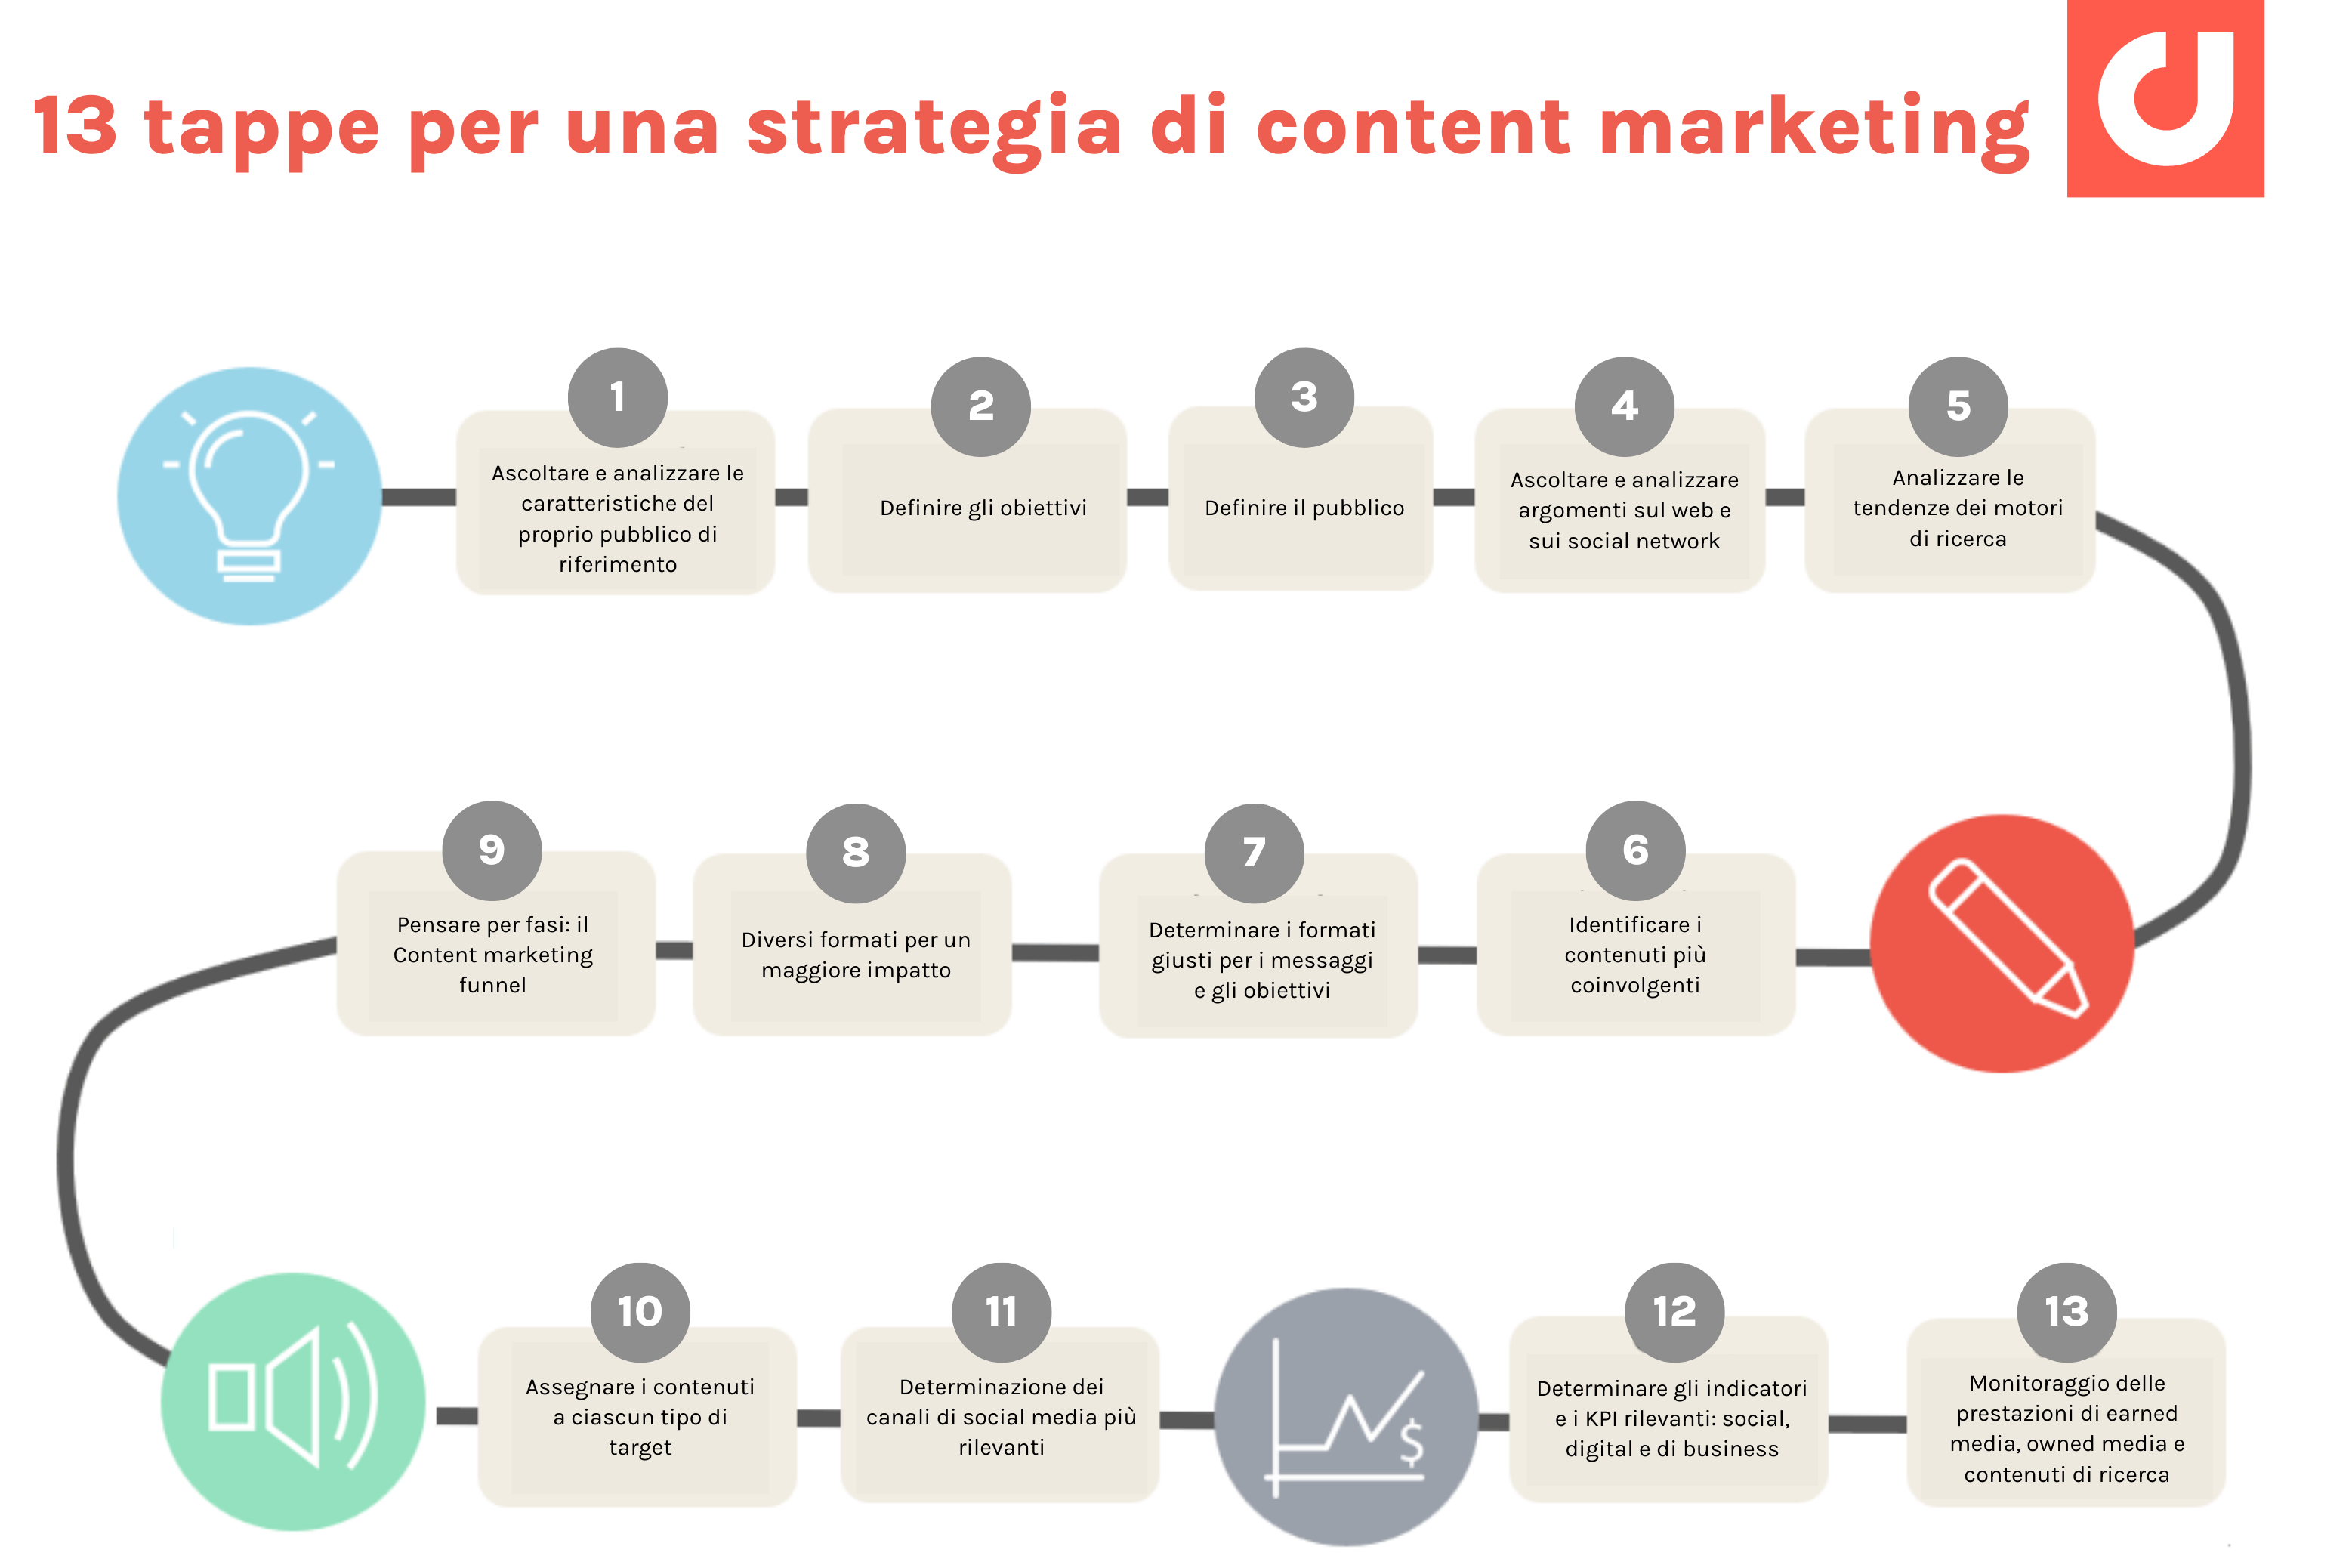 13 tappe per una strategia di content marketing di successo